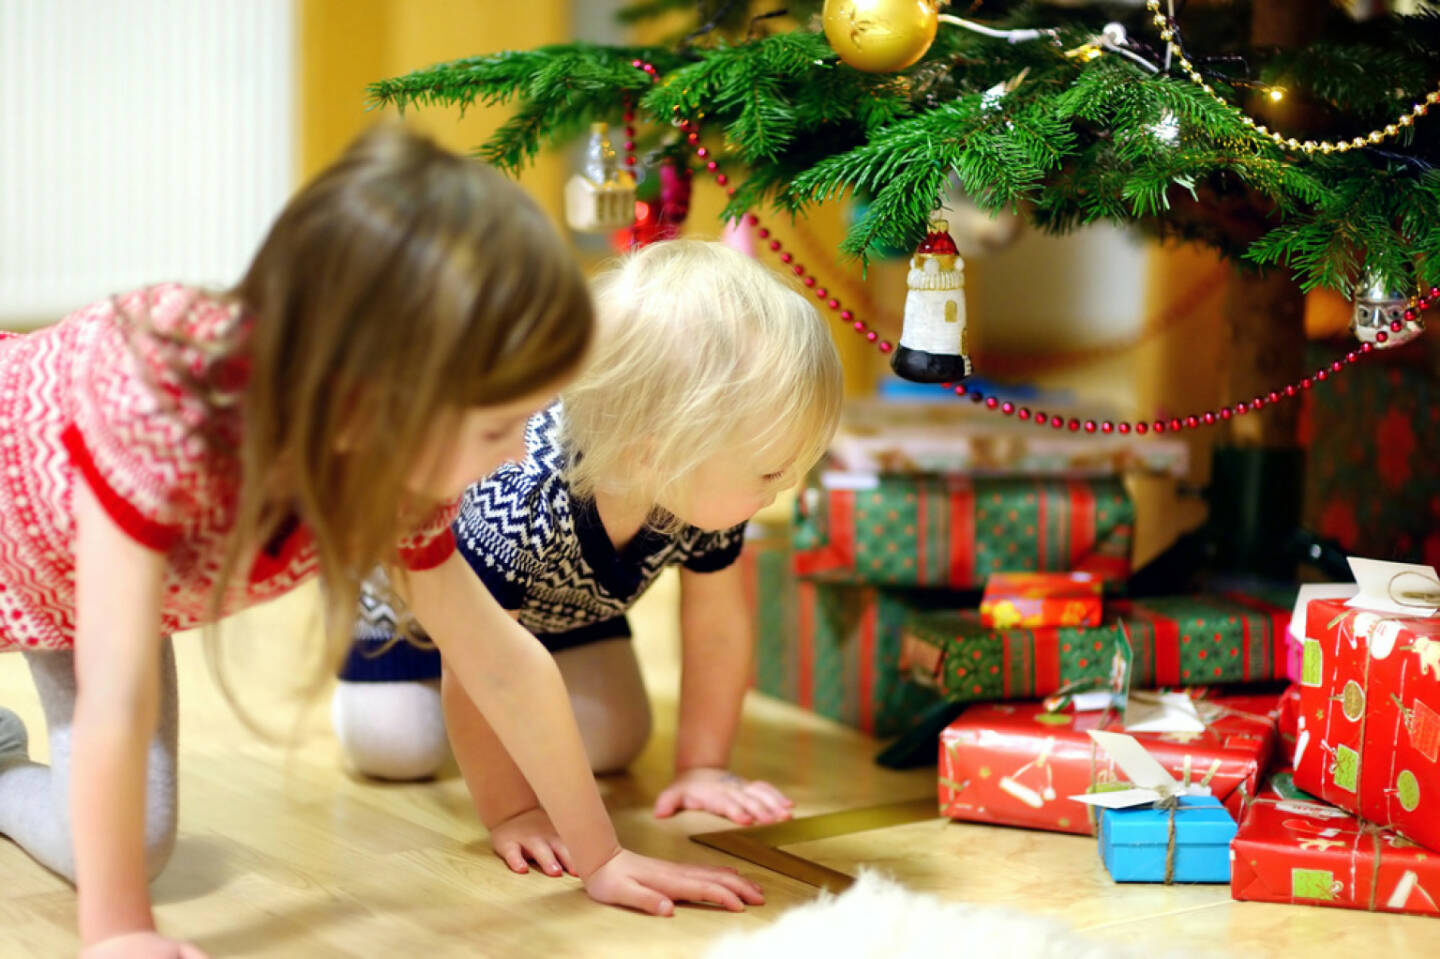 Weihnachten, Geschenke, Bescherung, Kinder, http://www.shutterstock.com/de/pic-211839097/stock-photo-two-adorable-little-sisters-looking-for-gifts-under-a-christmas-tree-on-christmas-eve-at-home.html